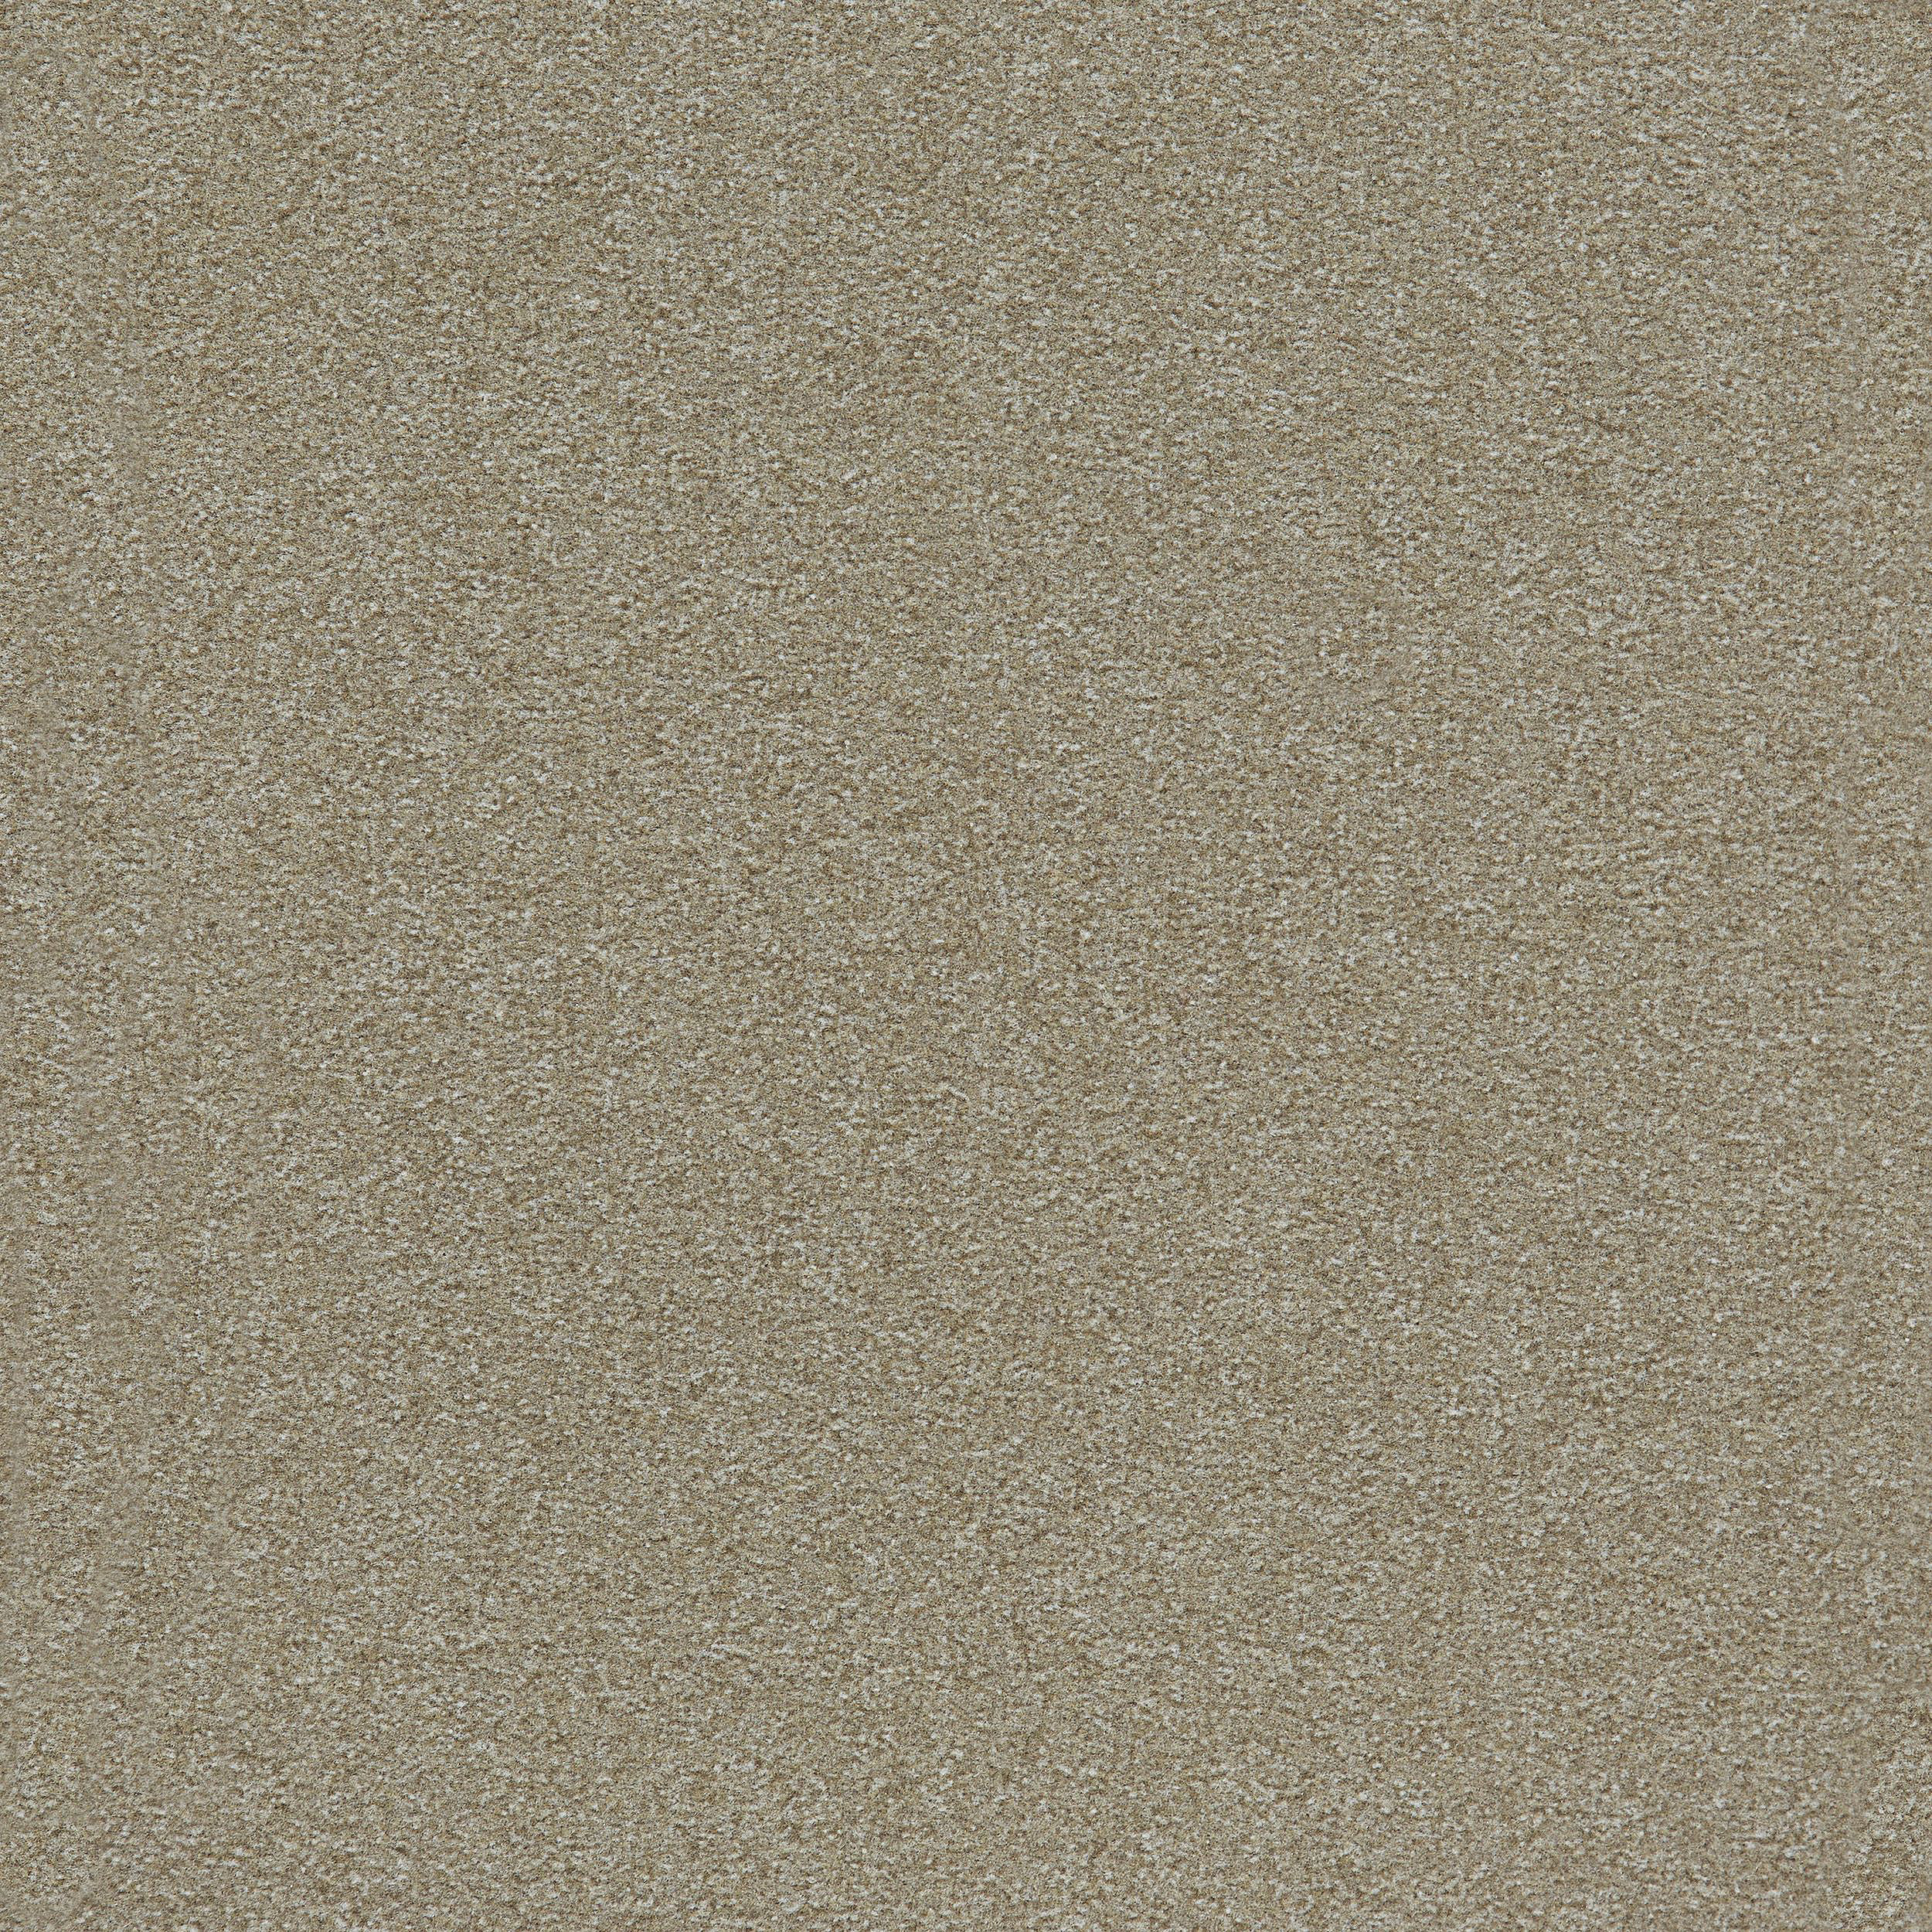 Heuga 725 Carpet Tile In Oyster afbeeldingnummer 5